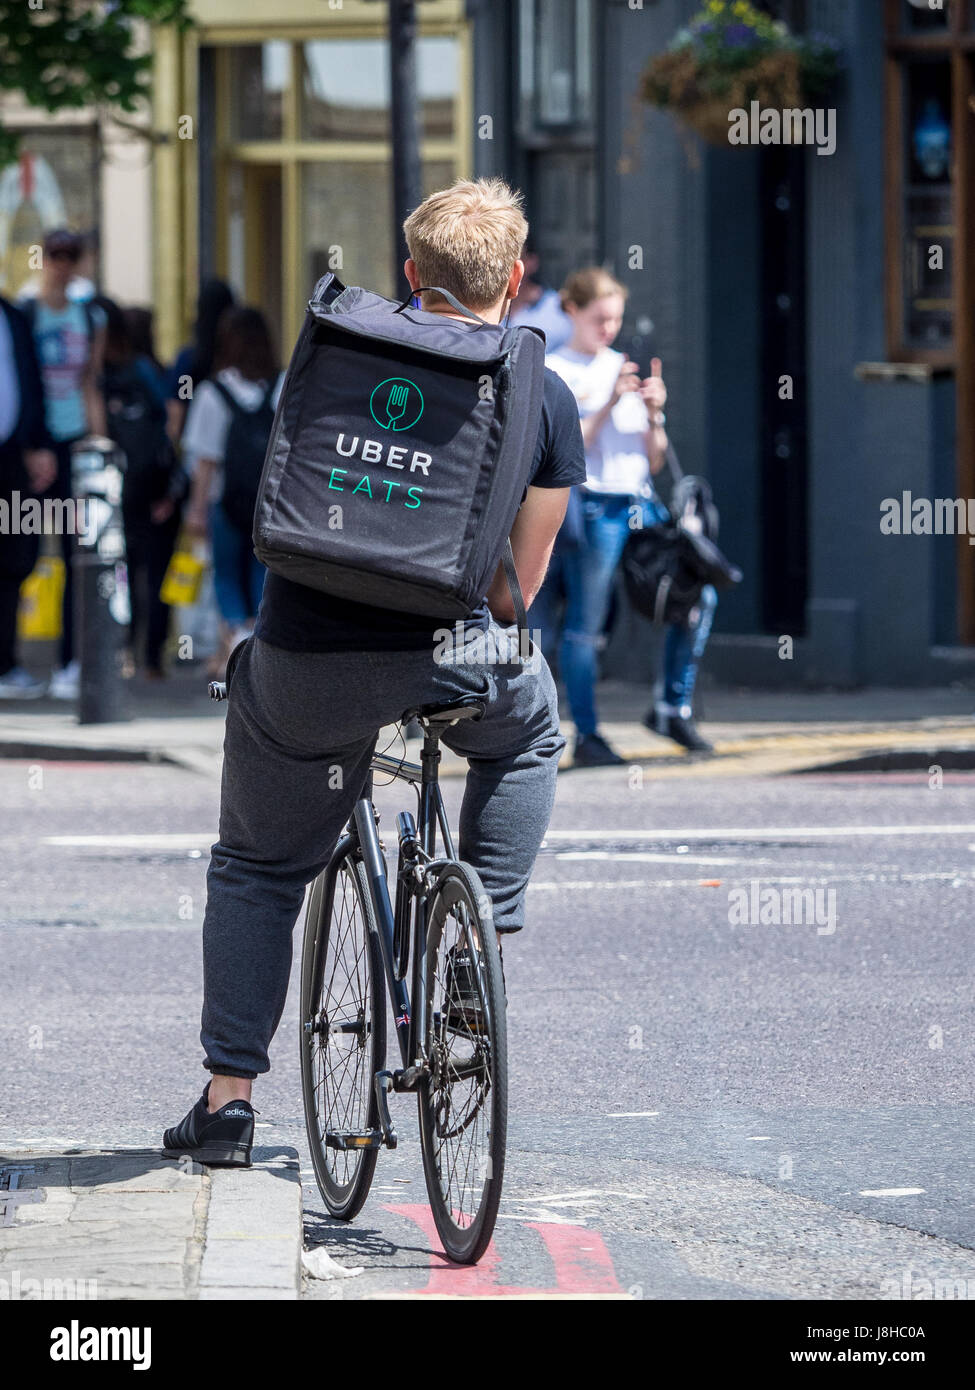 deliver with uber eats on bike